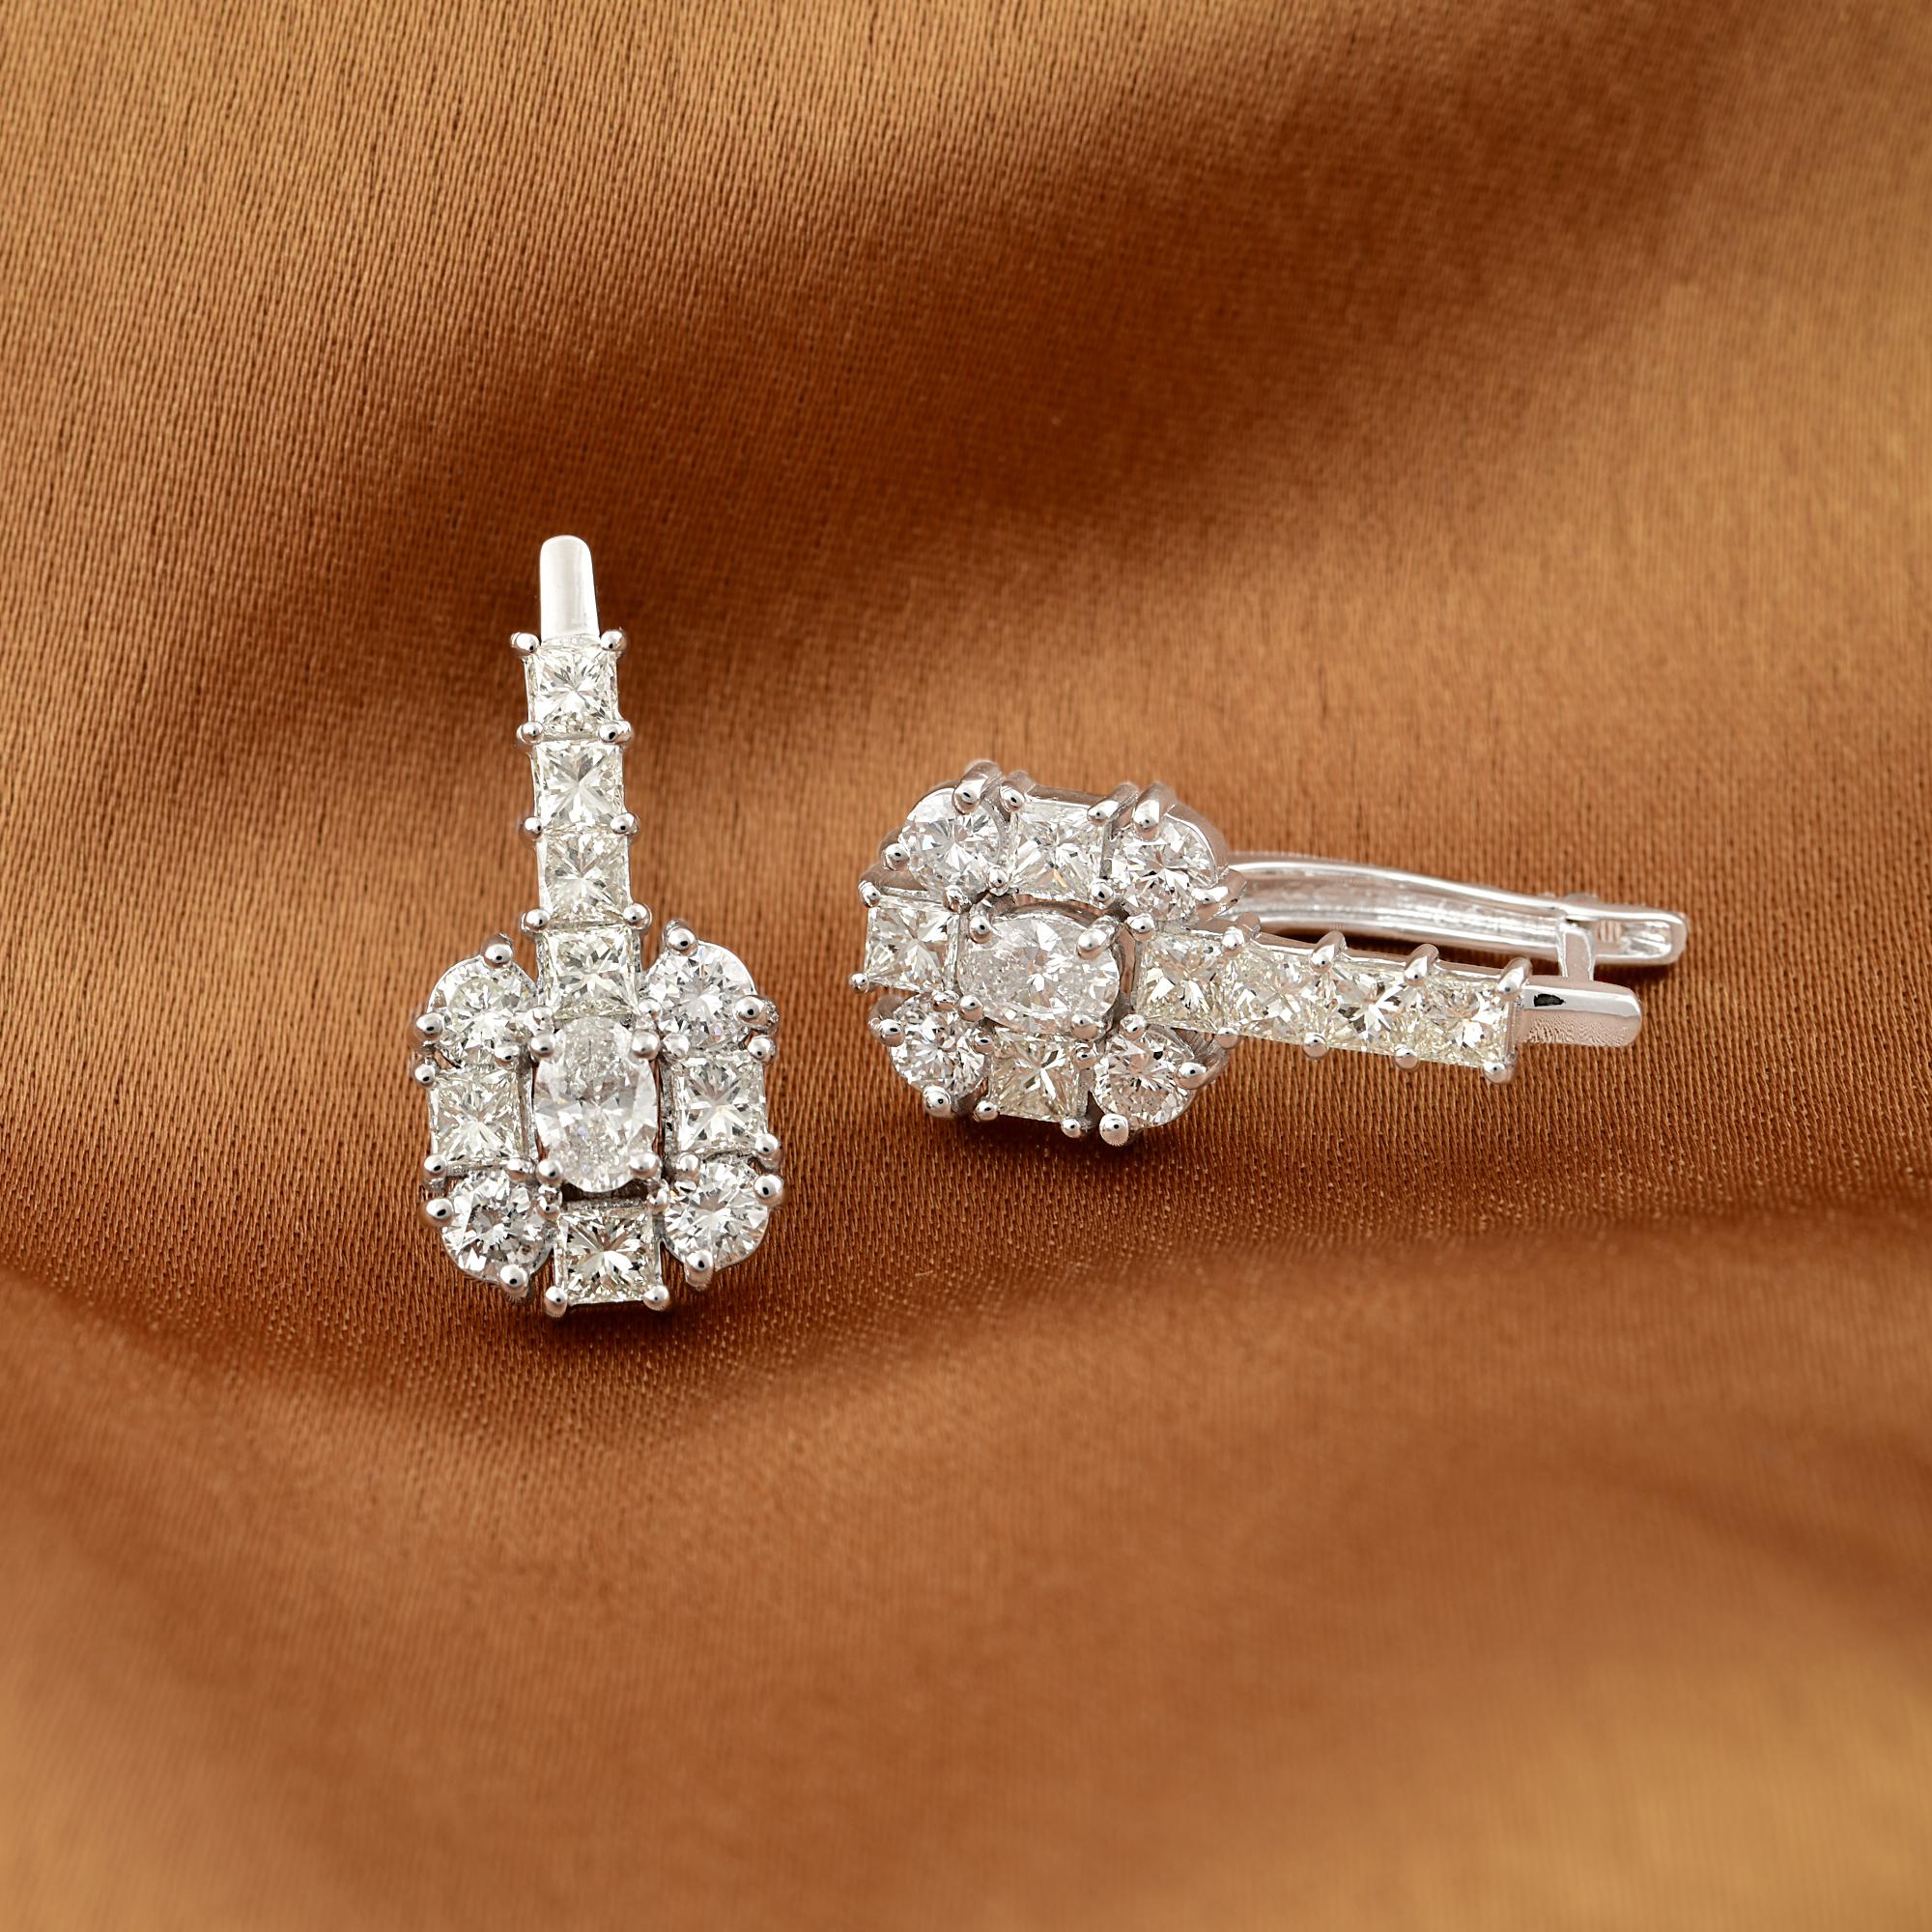 Modern SI Clarity HI Color Princess Cut Diamond Stud Earrings 18k Gold Handmade Jewelry For Sale